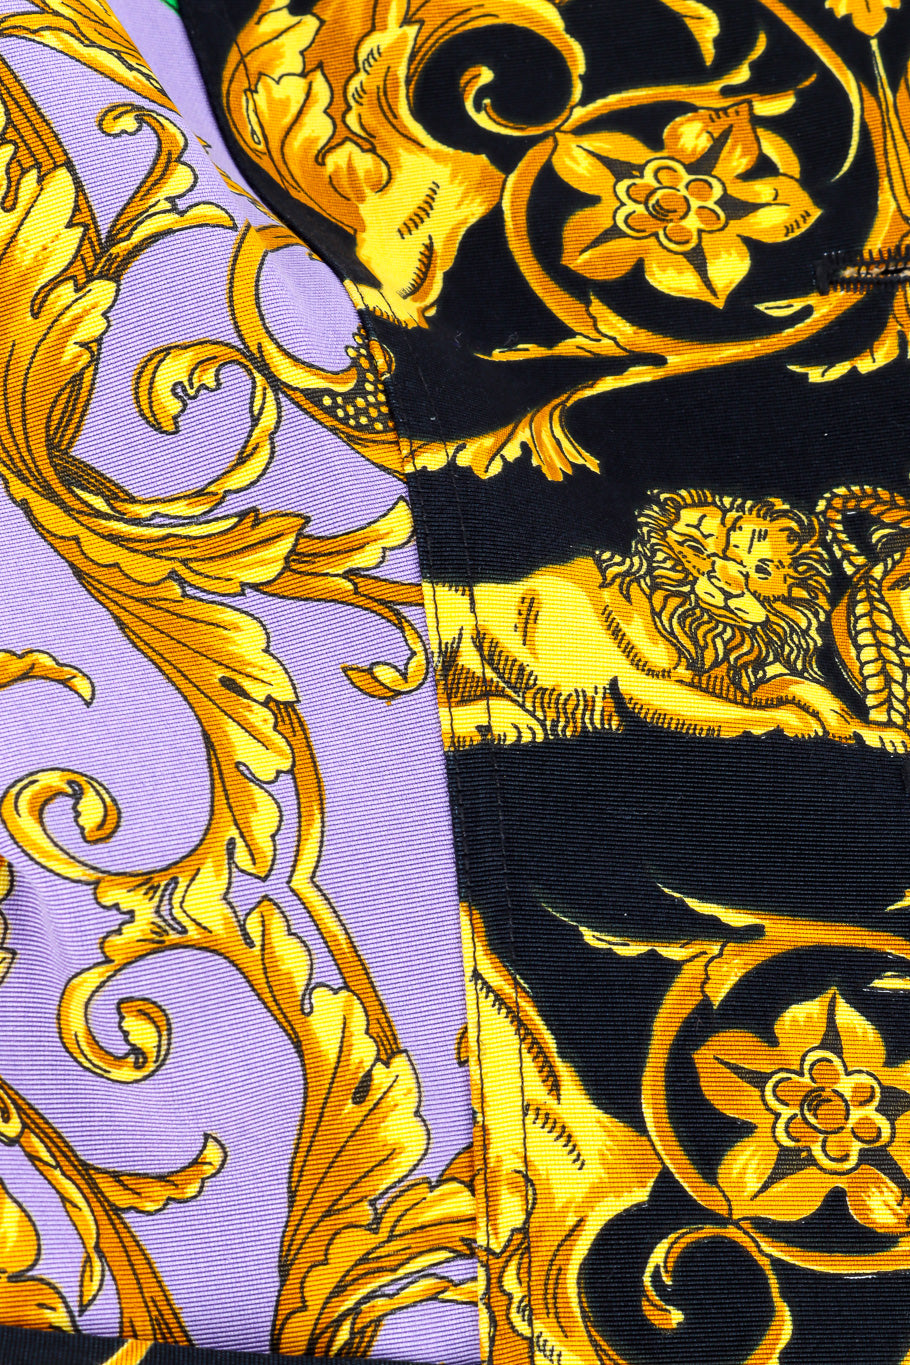 Lion brocade print blazer fabric detail @recessla